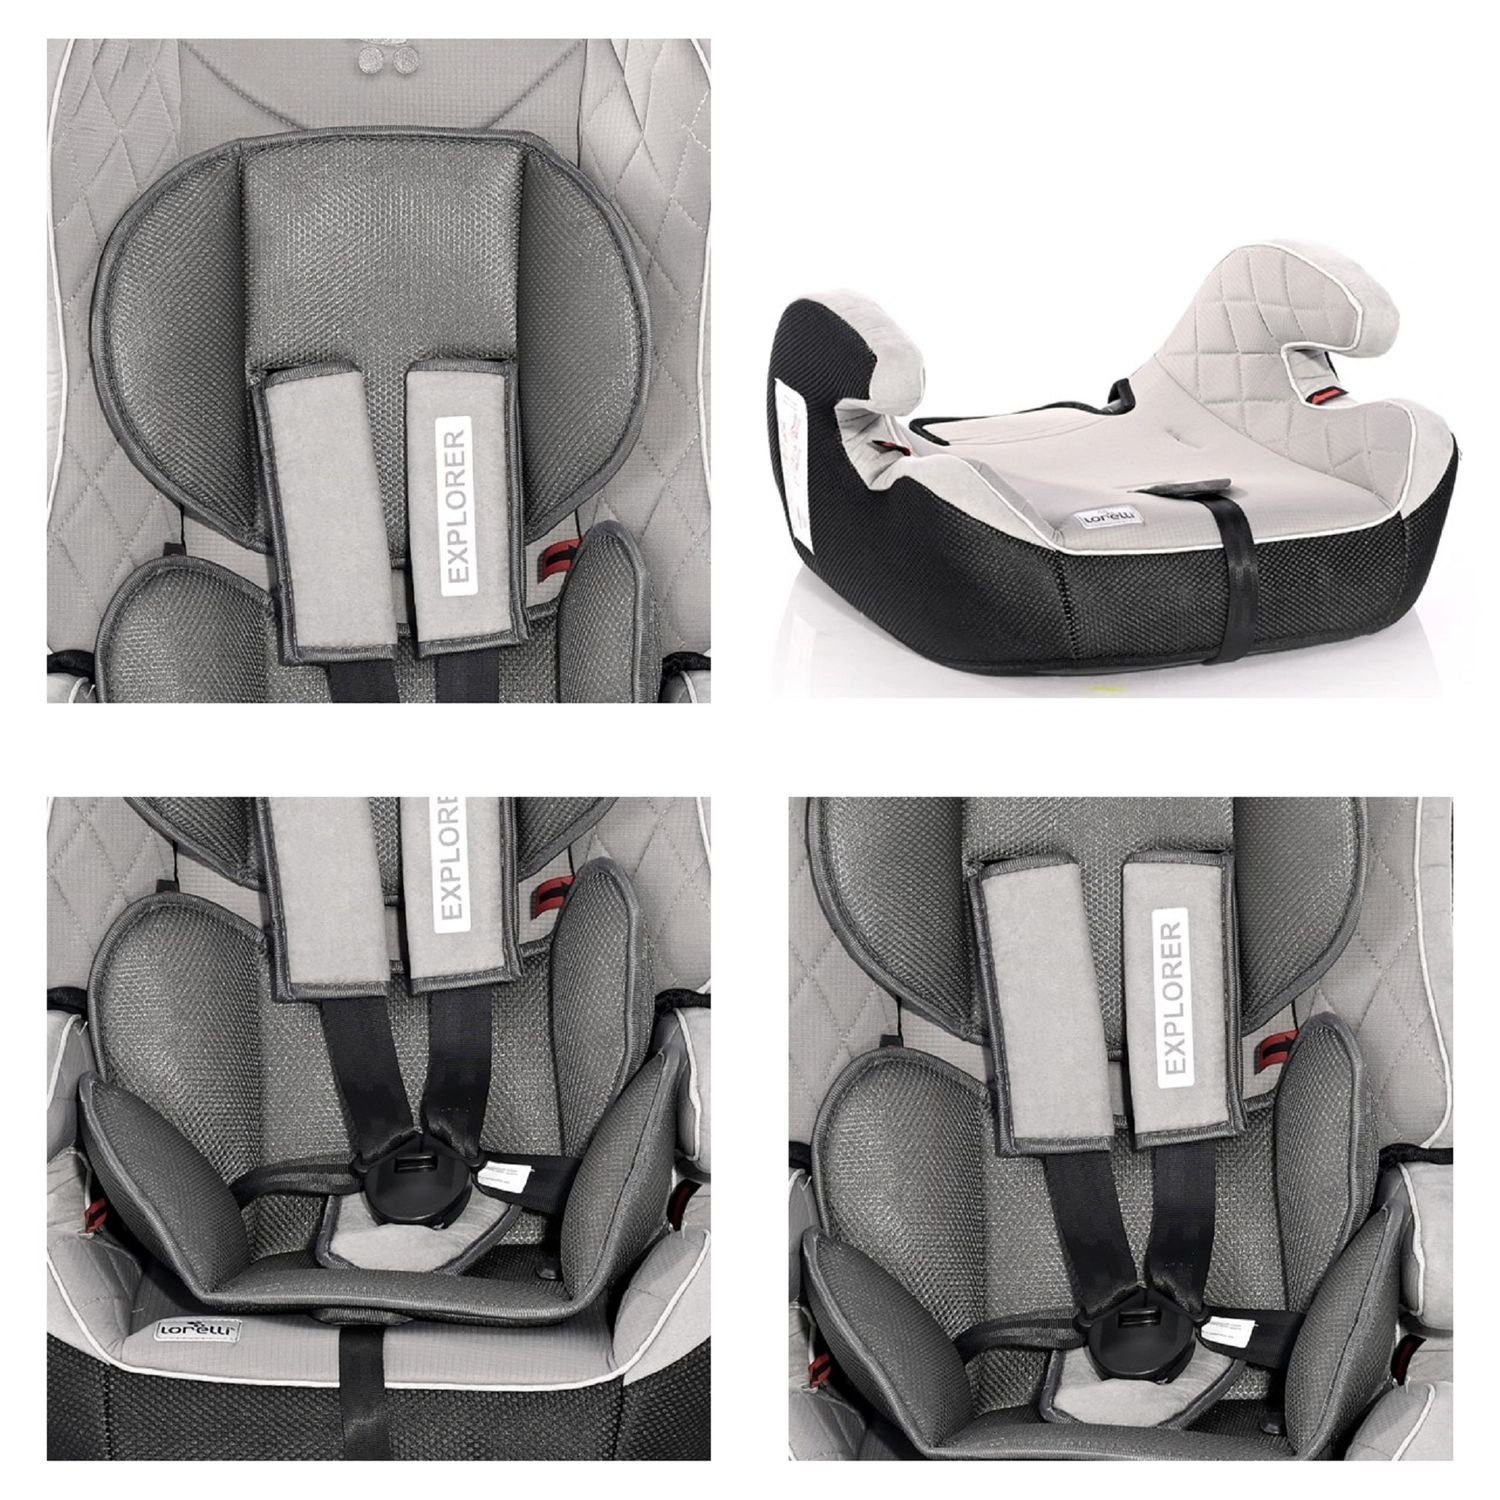 Gruppe kg) Kindersitz hohe (9 dunkelgrün Lorelli kg, abnehmbare 1/2/3, 36 36 - bis: Autokindersitz Explorer Rückenlehne